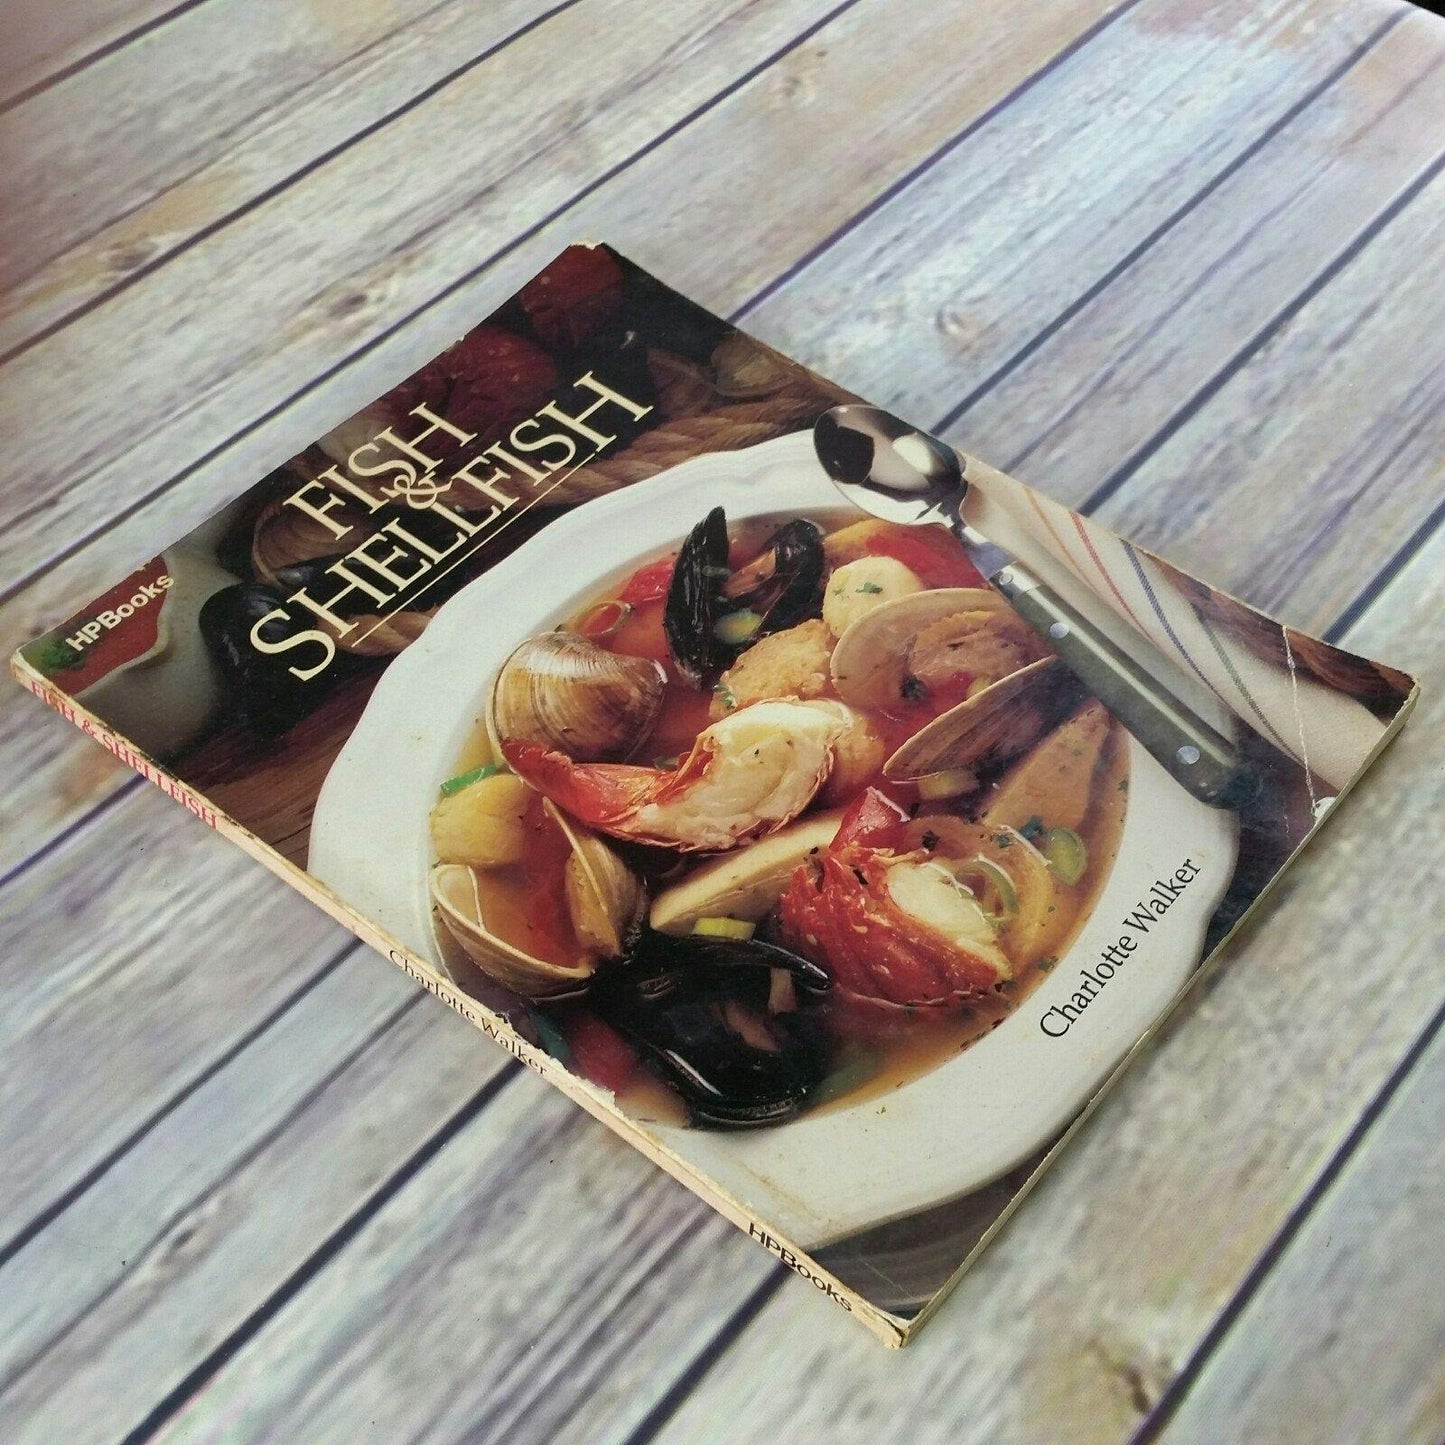 Vintage Seafood Cookbook Fish and Shellfish Seafood Recipes Charlotte Walker HPBooks Paperback 1984